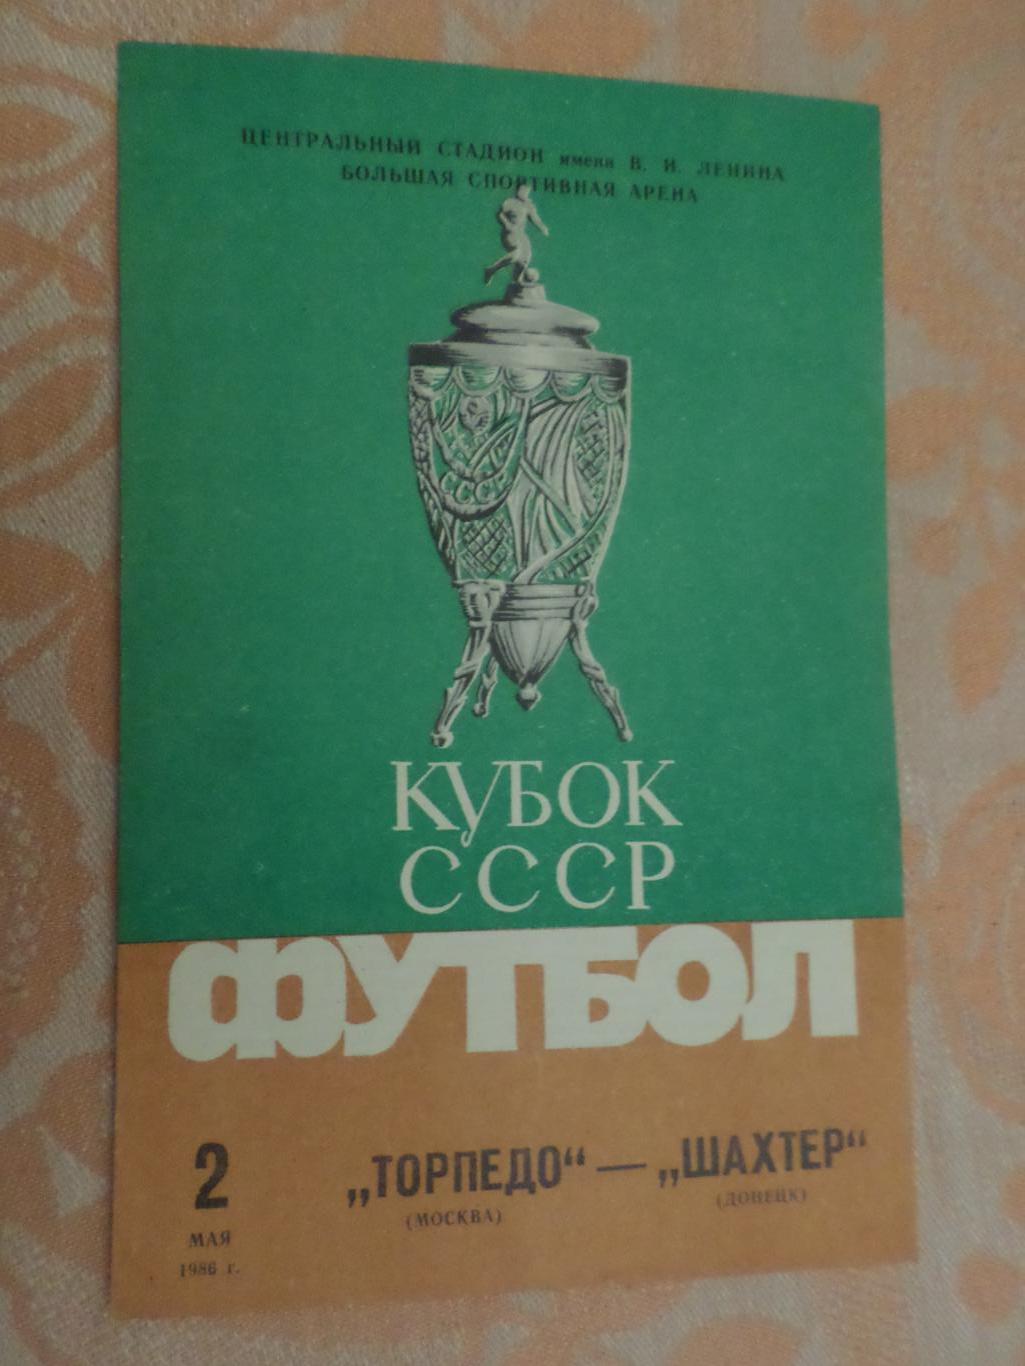 программа Торпедо Москва - Шахтер Донецк 1986 г кубок СССР финал